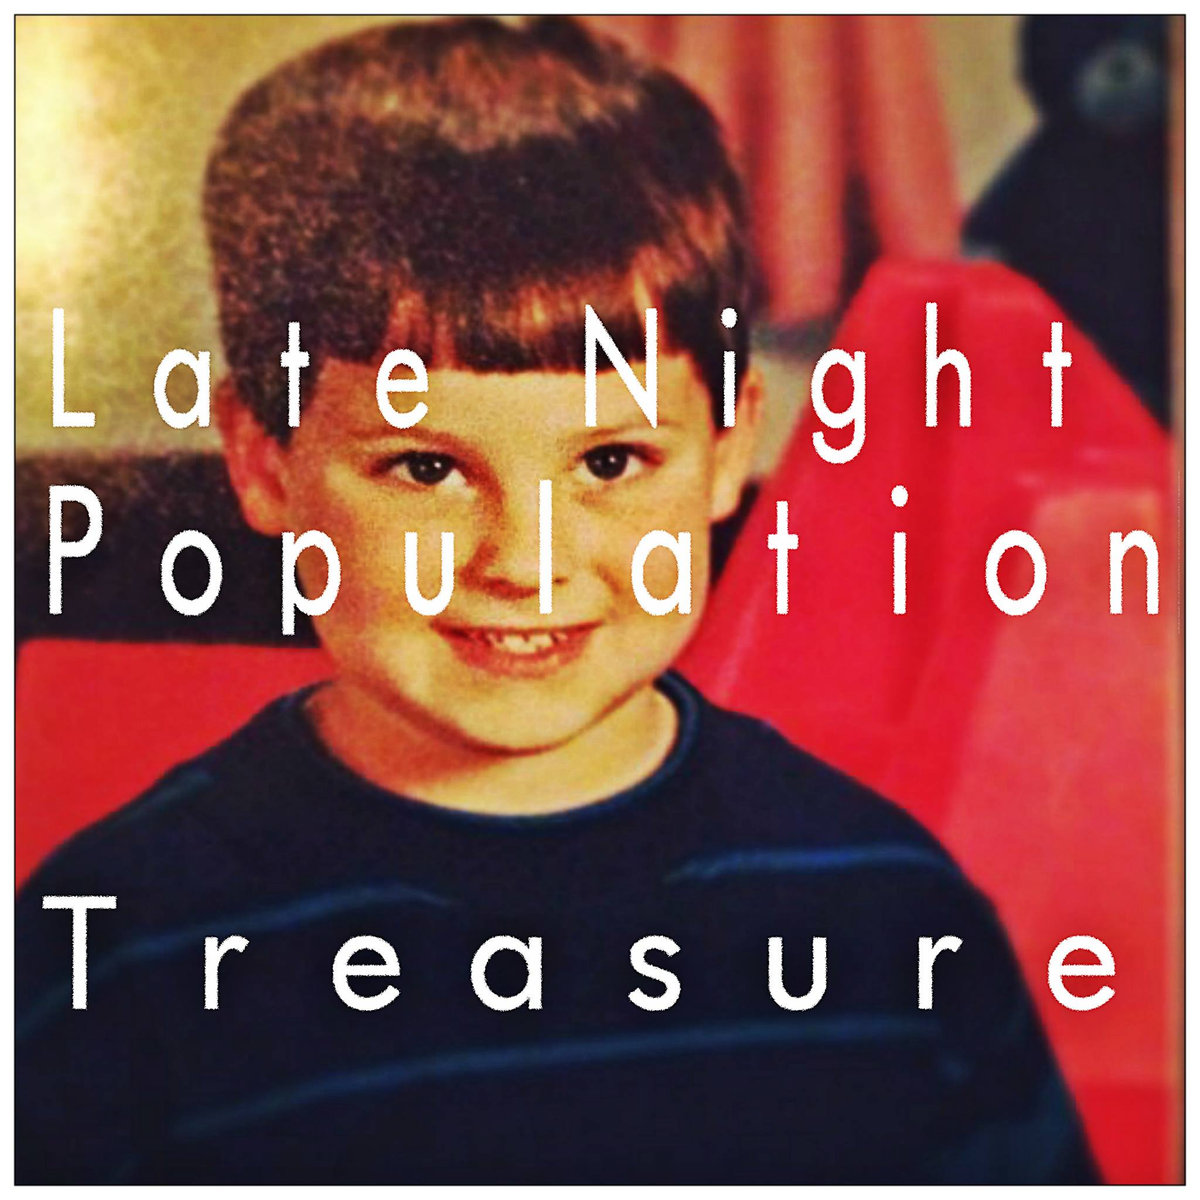 Treasure Late Night Population